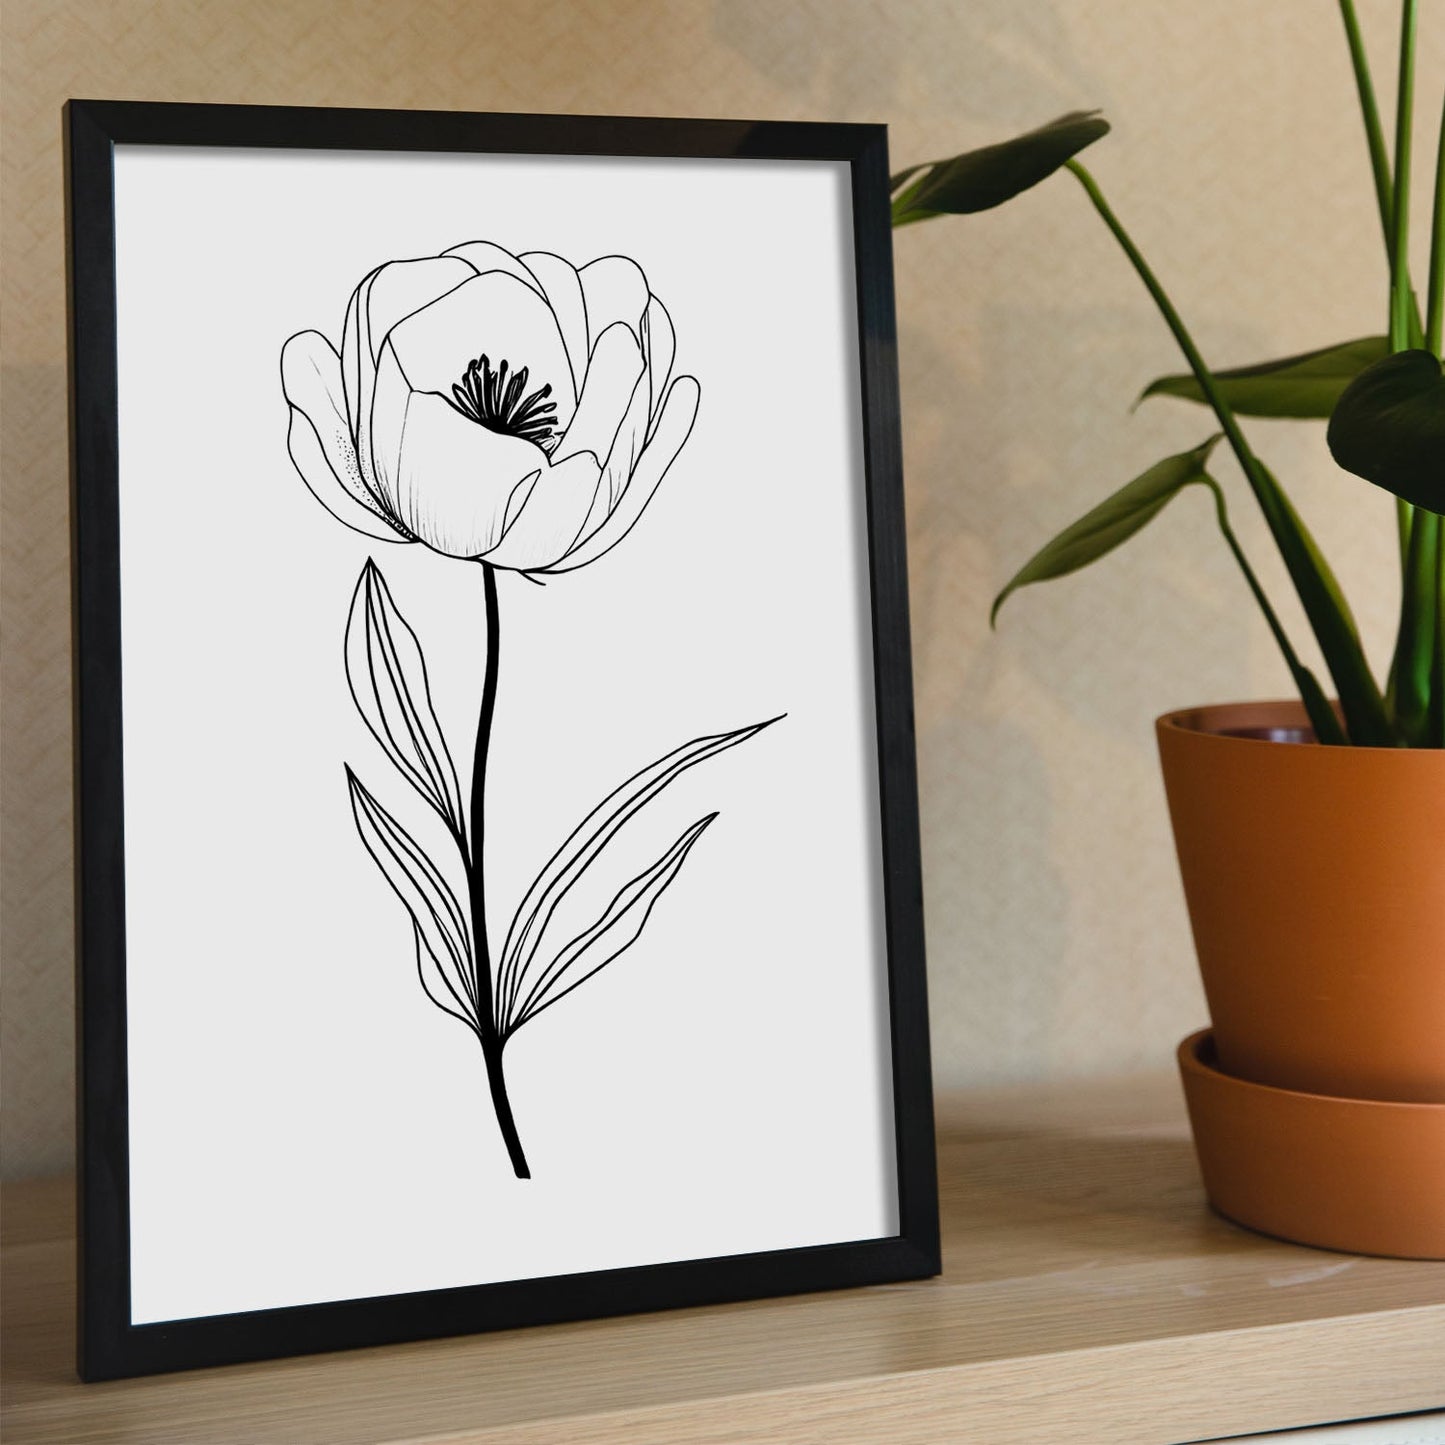 Nacnic Tulipa Minimalist Line Art_2. Aesthetic Wall Art Prints for Bedroom or Living Room Design.